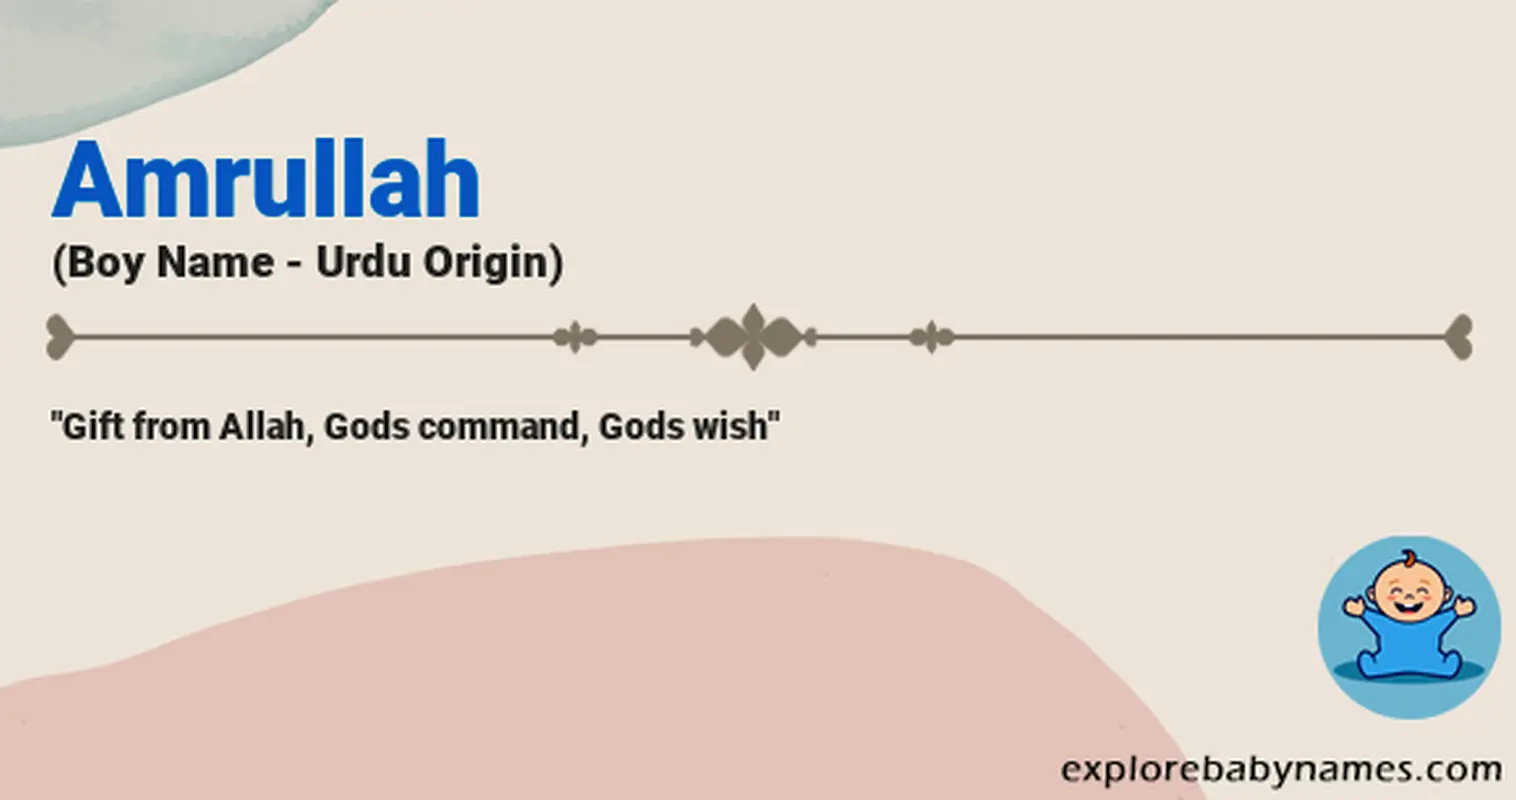 Meaning of Amrullah